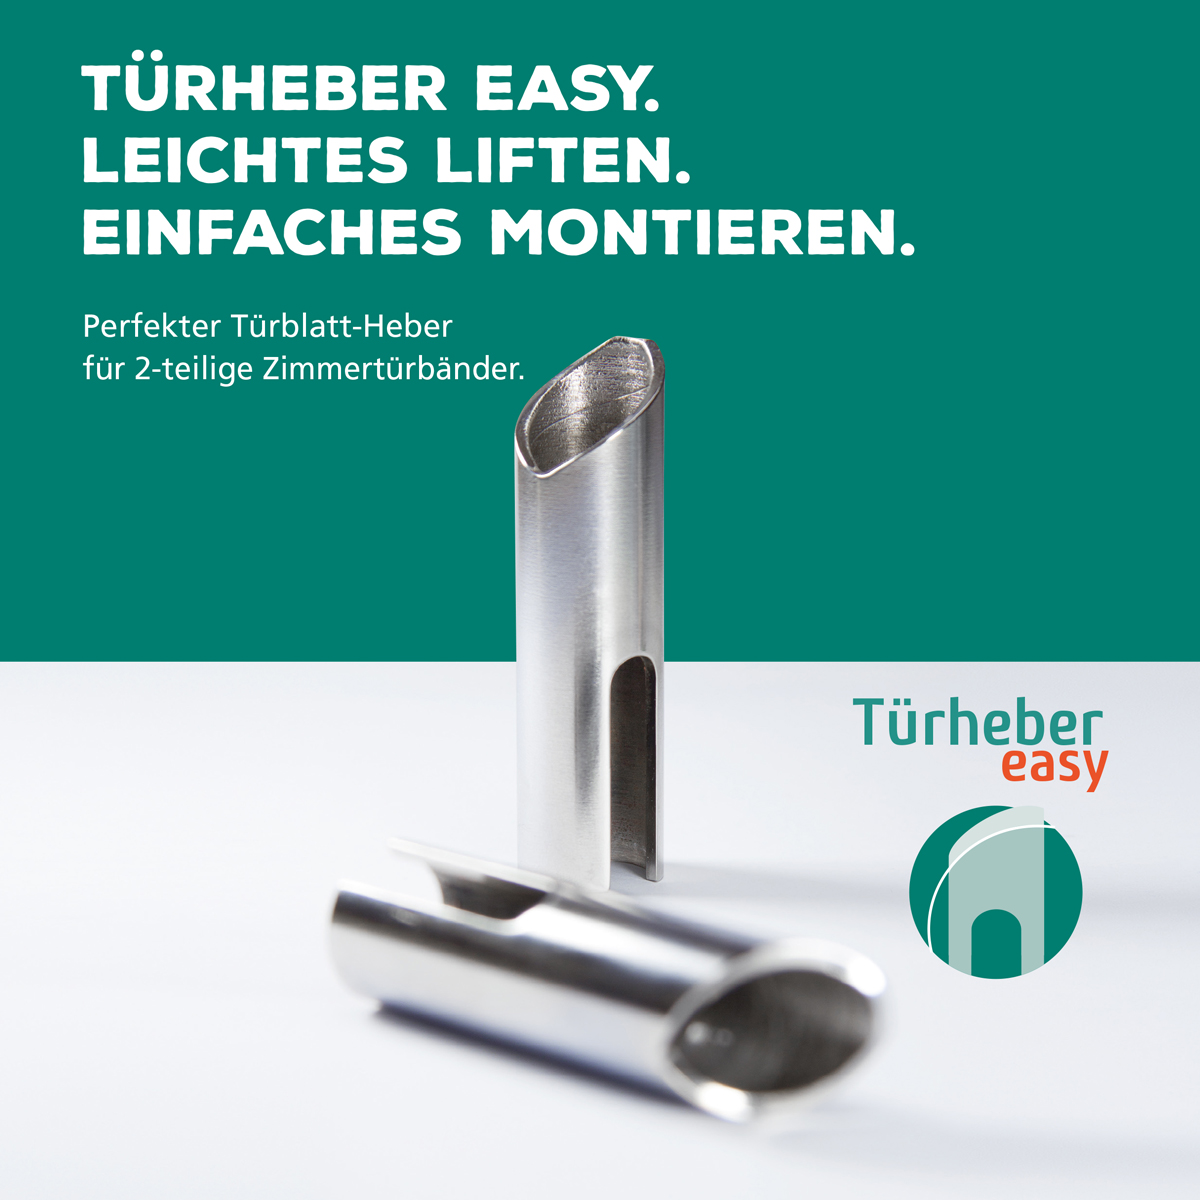 SAARTECH – TÜRHEBER EASY - mavrogiannis + nordwald GmbH